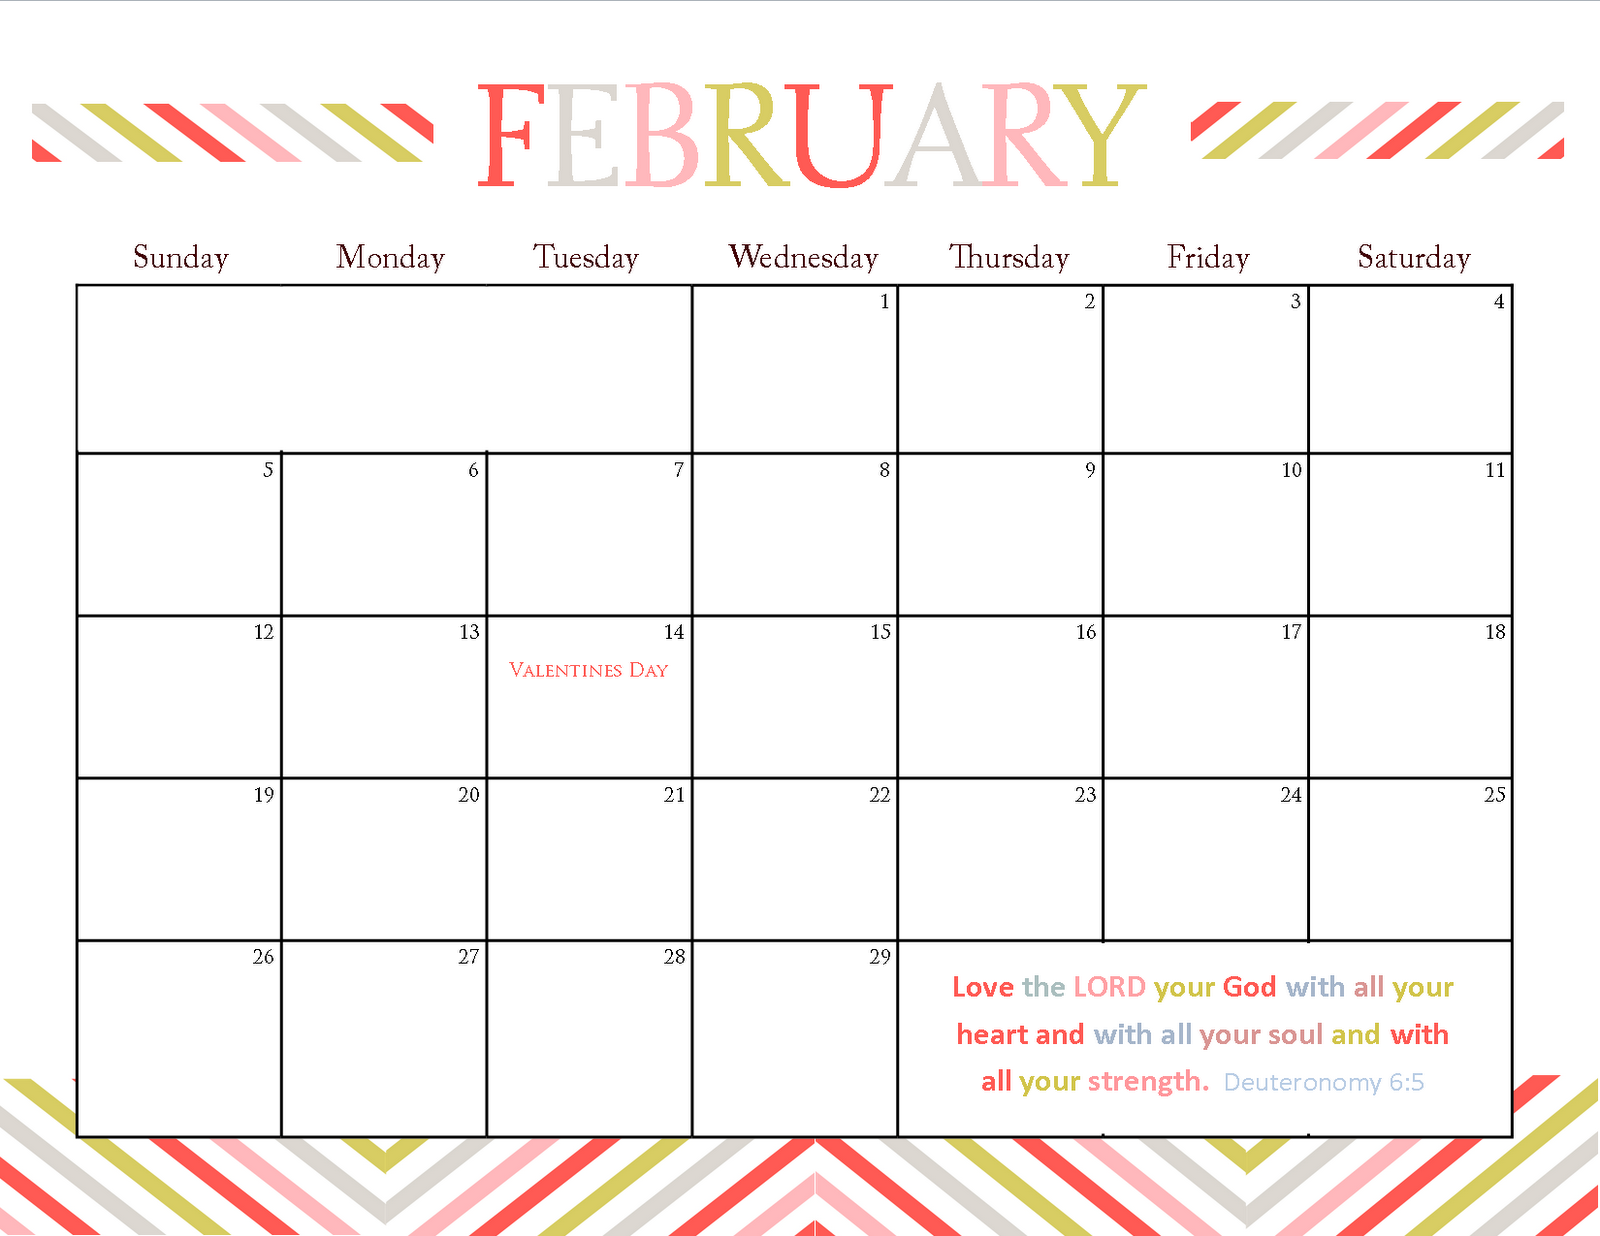 http://3.bp.blogspot.com/-T4WEN0iPzvM/Txjd9NuZdfI/AAAAAAAABSs/H_6tdb_Hp5I/s1600/Calendar+February+2012+Multicolor.png